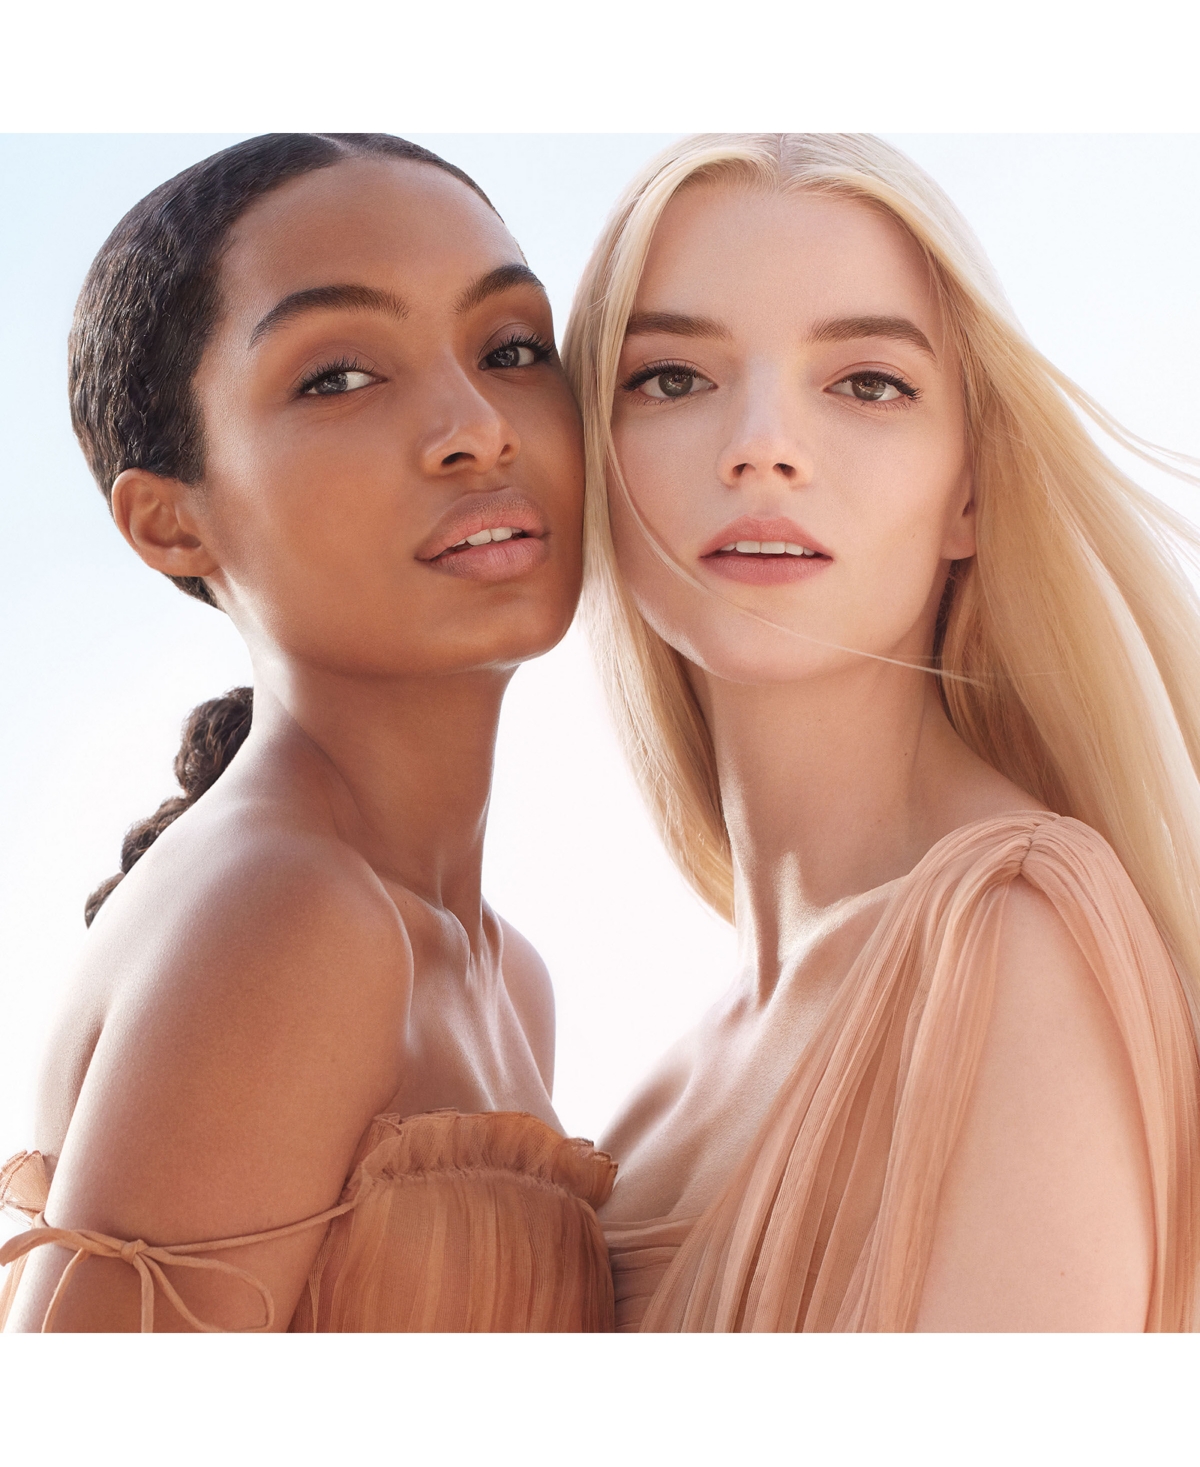 Shop Dior Forever Skin Correct Full-coverage Concealer In N Neutral (light Skin With Neutral Beige